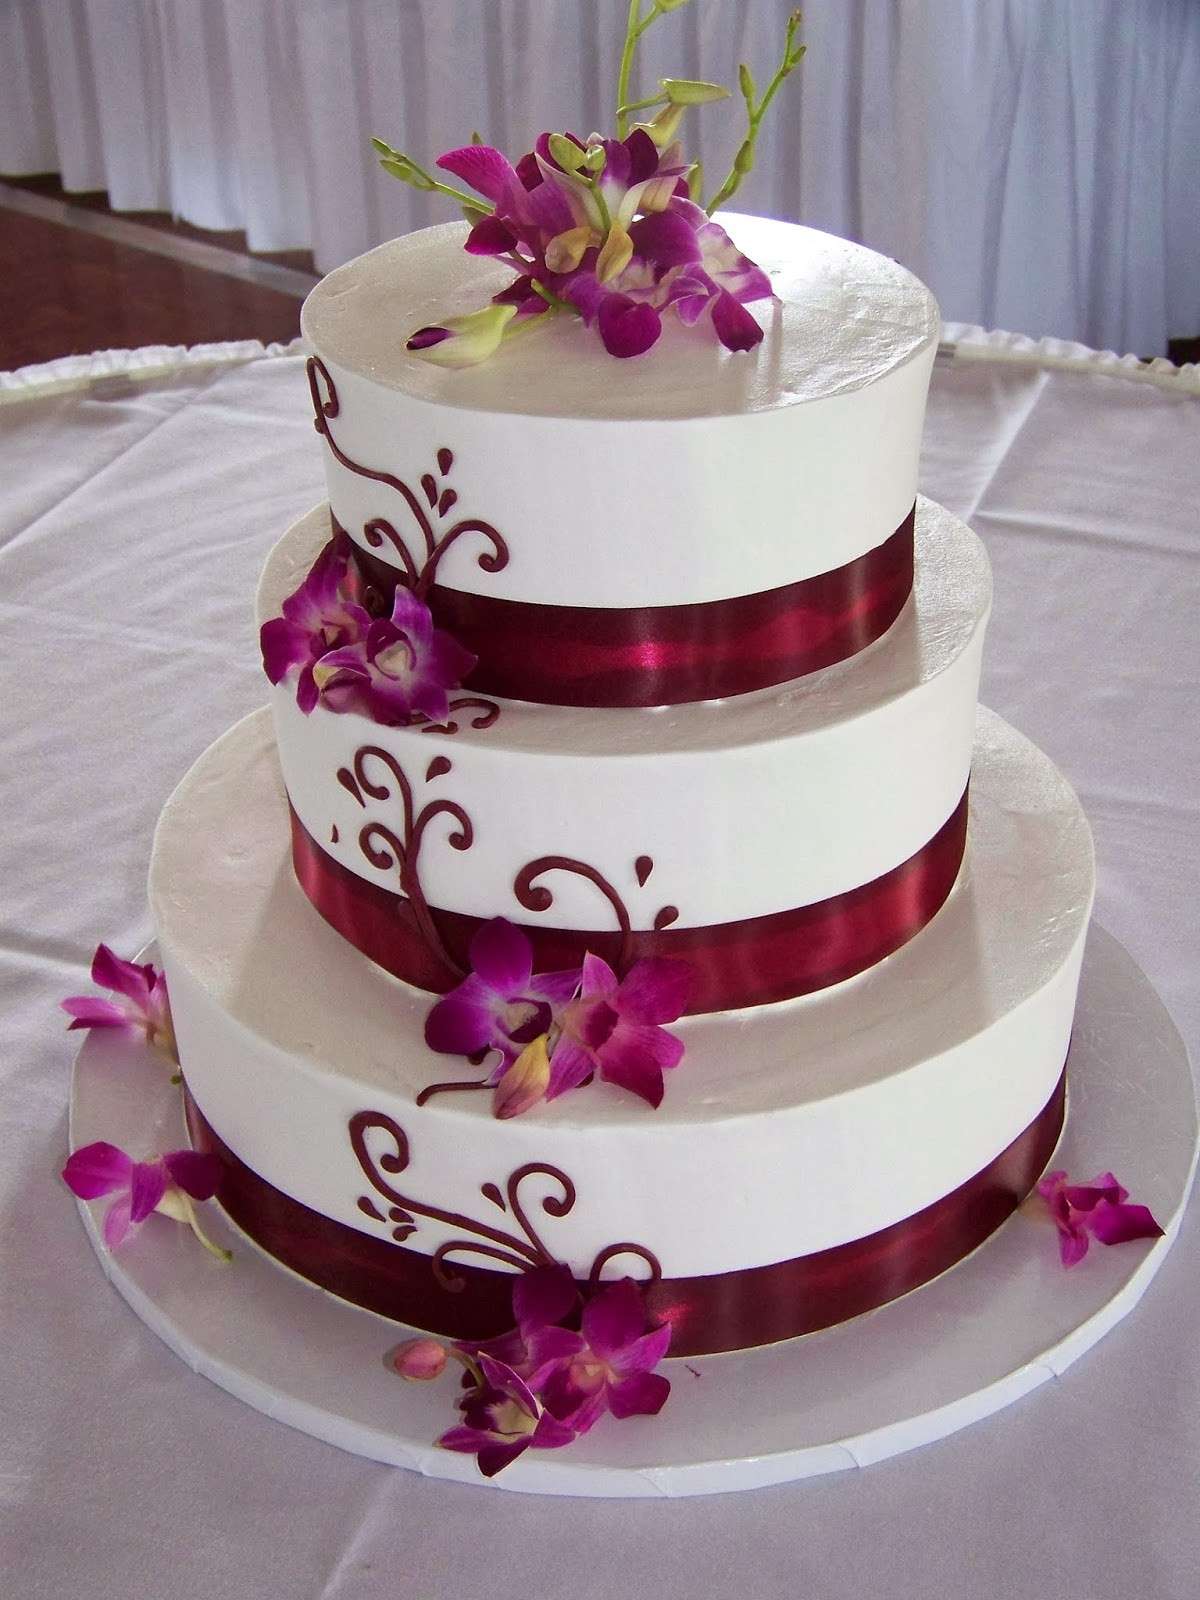 Photos Of Wedding Cakes
 7 wonders of the world Wedding Cake Hd Gallery